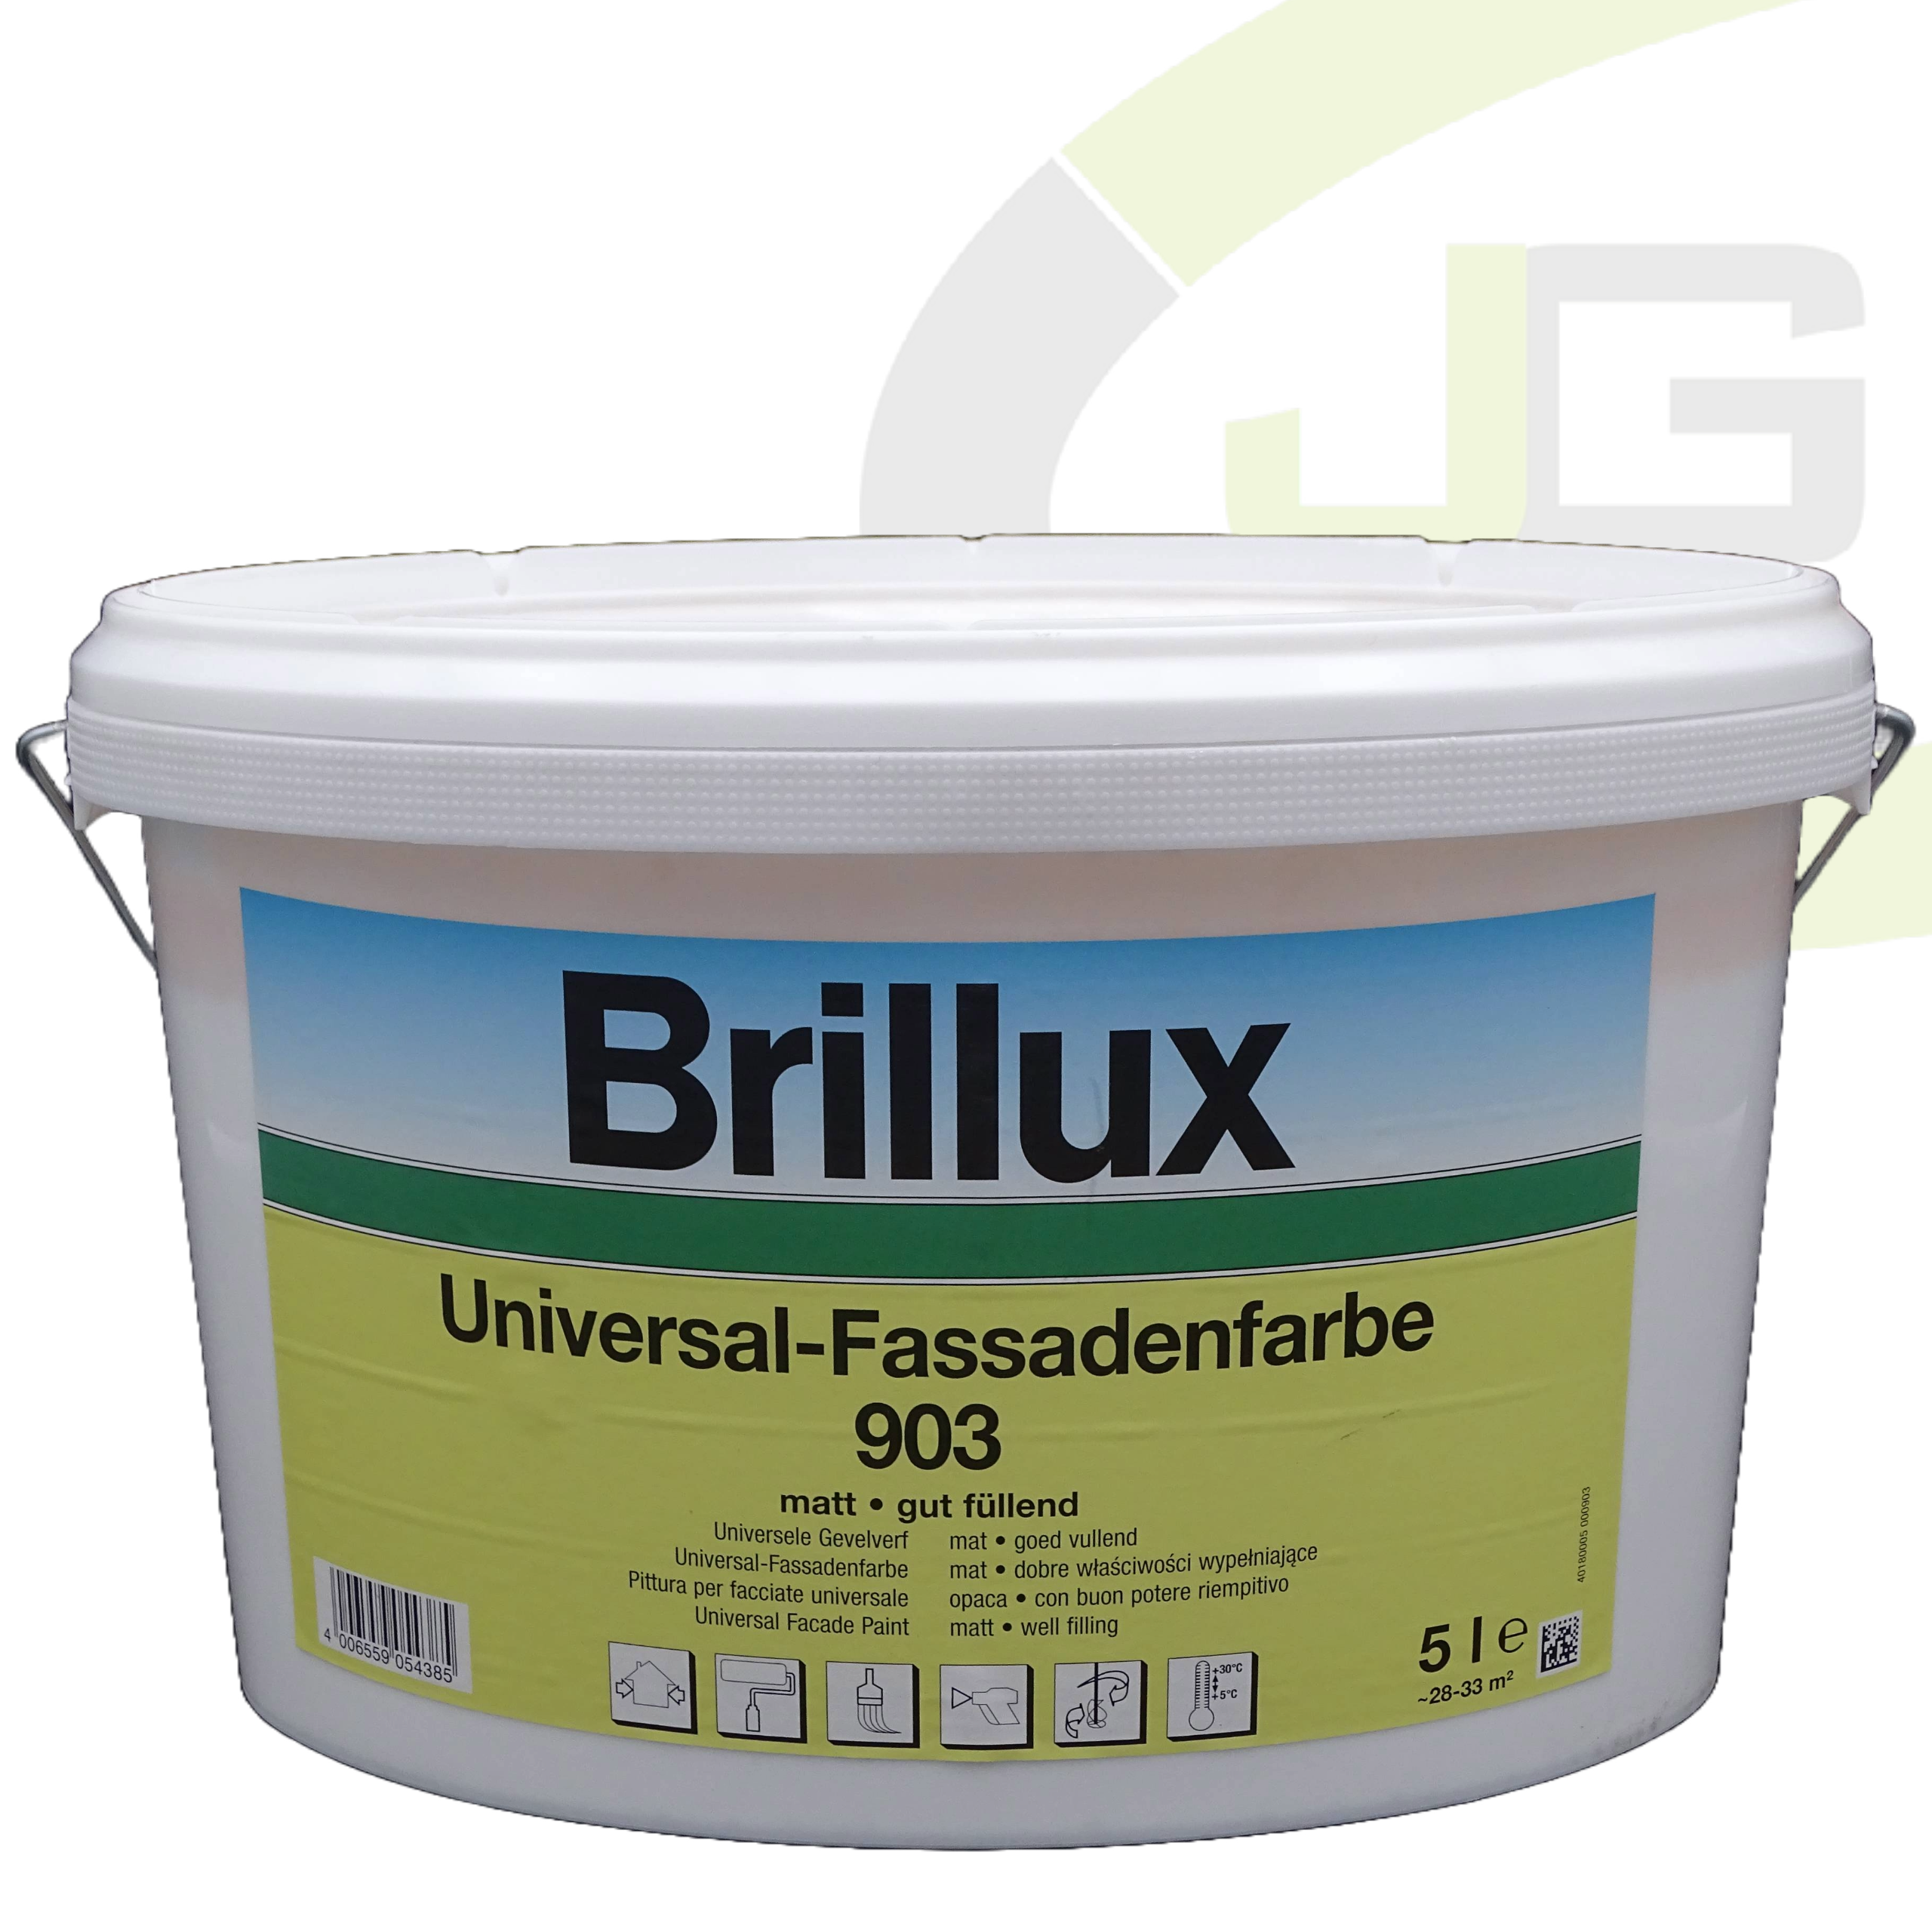 Brillux Universal-Fassadenfarbe 903 weiß - 5.00 LTR / Fassadenfarbe